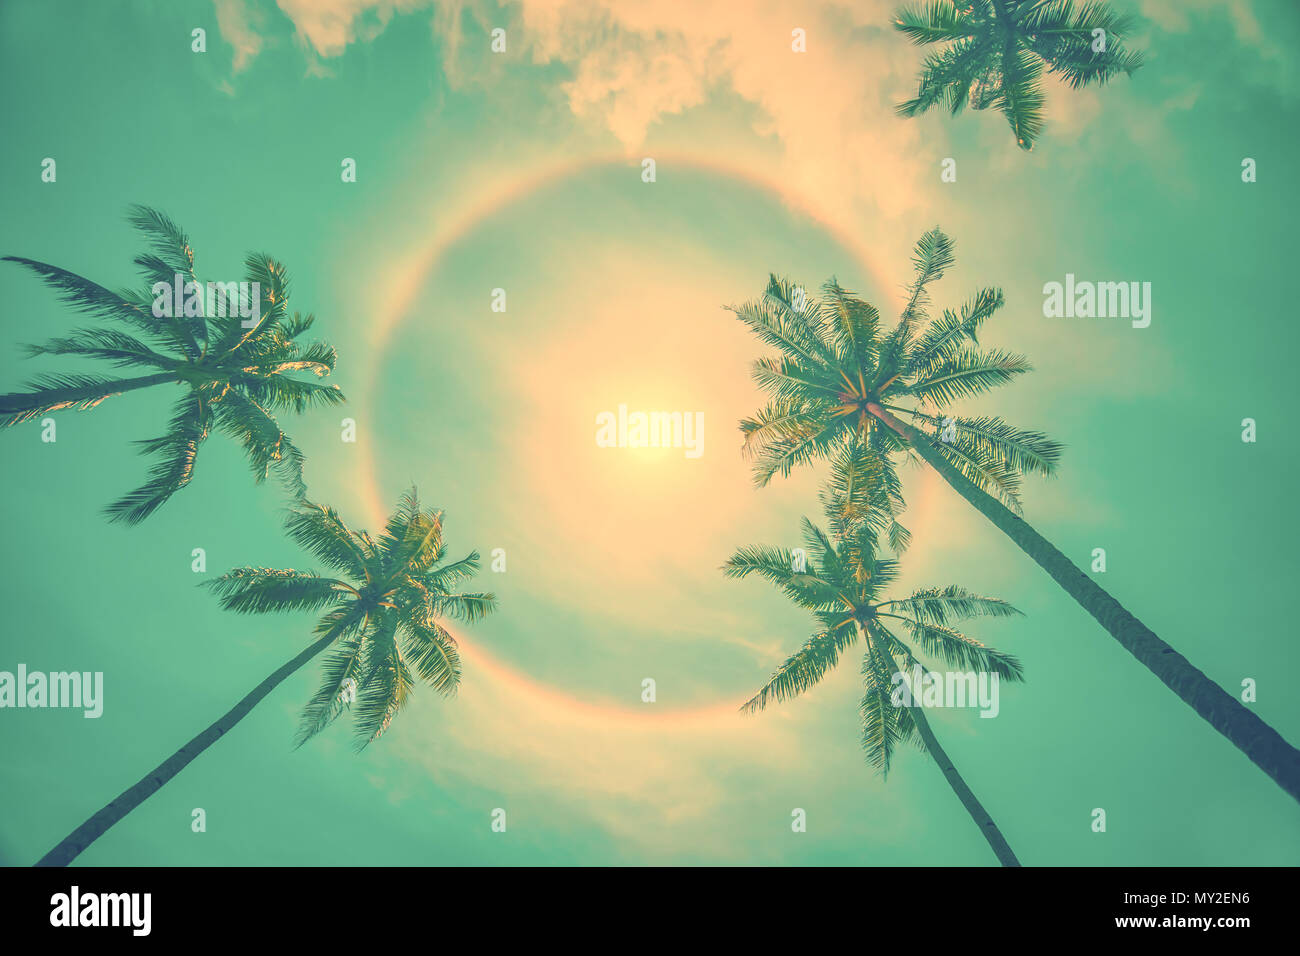 Sun rainbow circular halo phenomenon with palm trees, vintage summer background Stock Photo